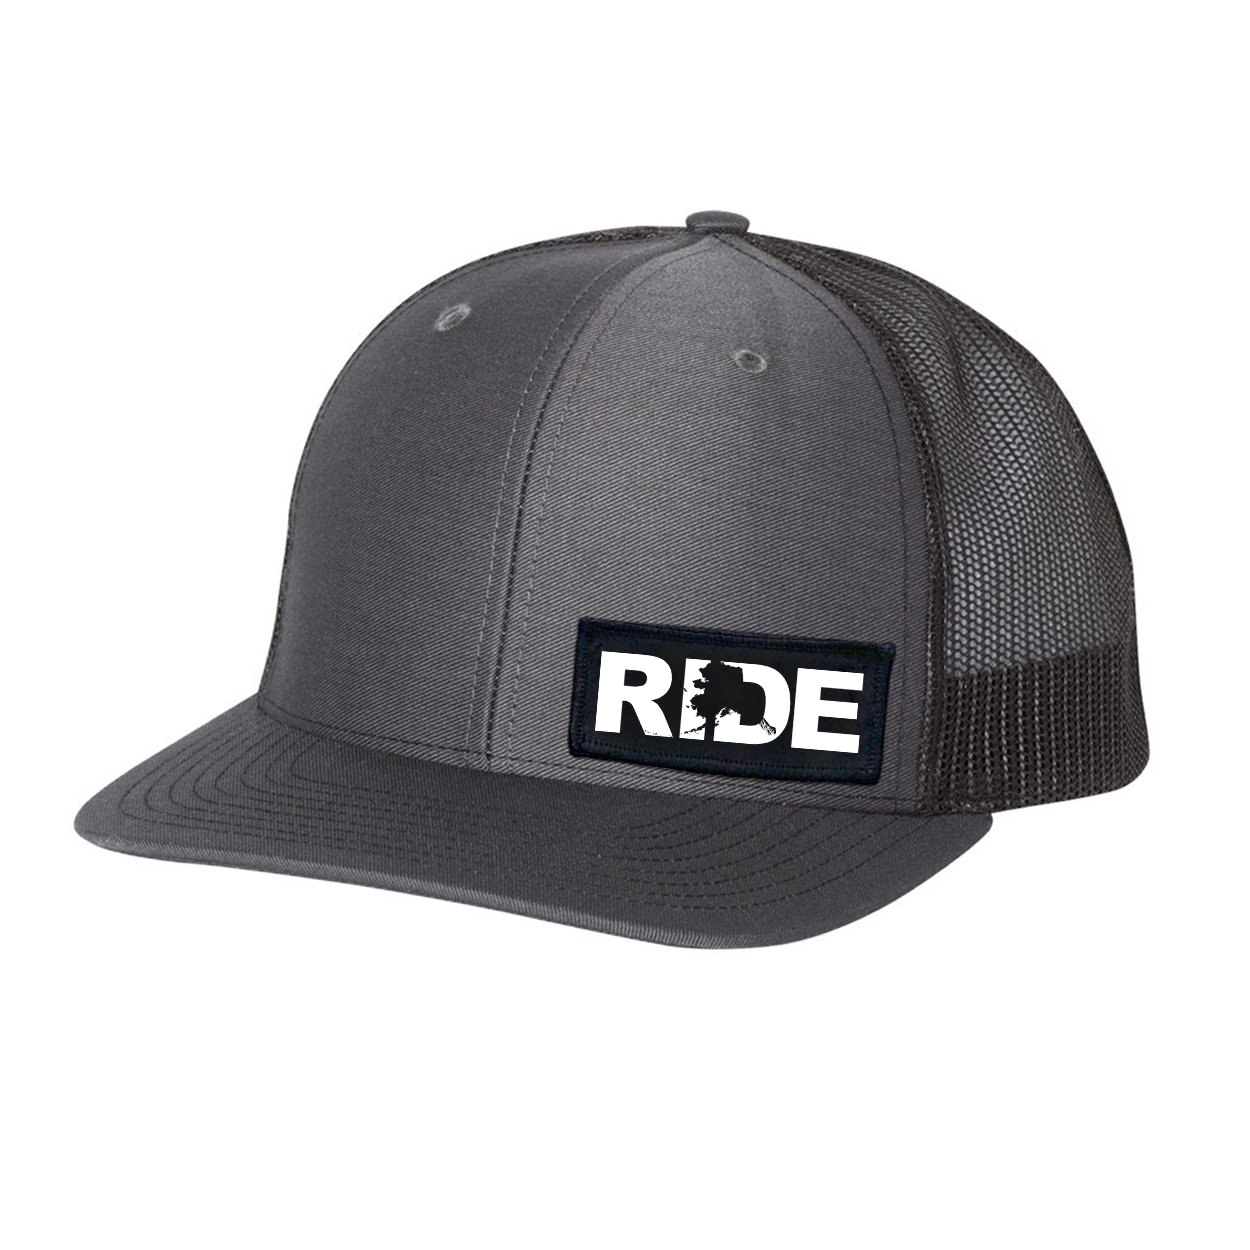 Ride Alaska Night Out Woven Patch Flex-Fit Hat Dark Gray/Black (White Logo)